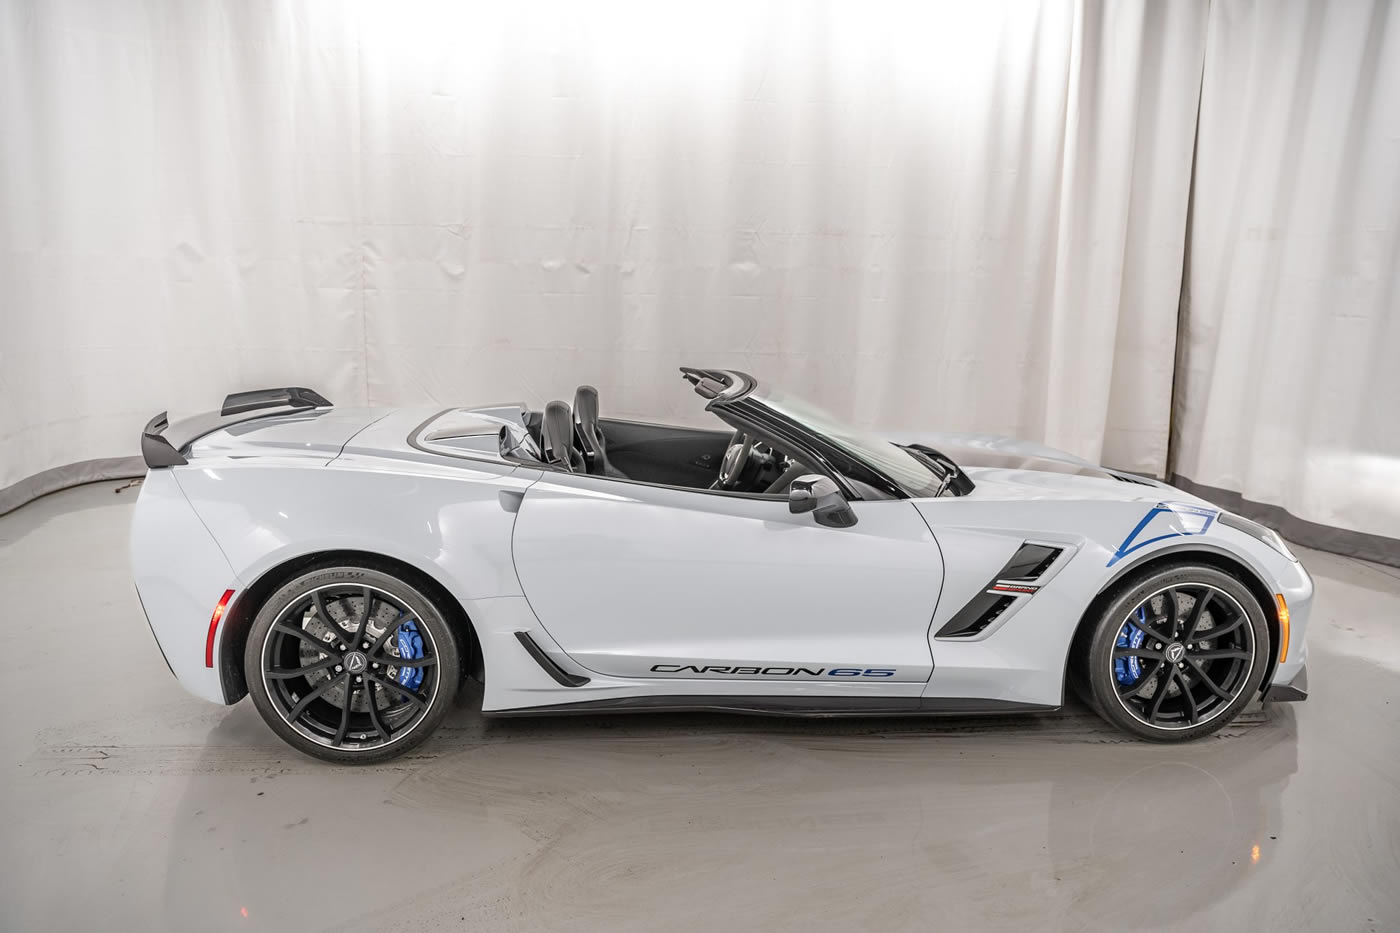 2018 Corvette Grand Sport Convertible Carbon 65 Edition 7-Speed